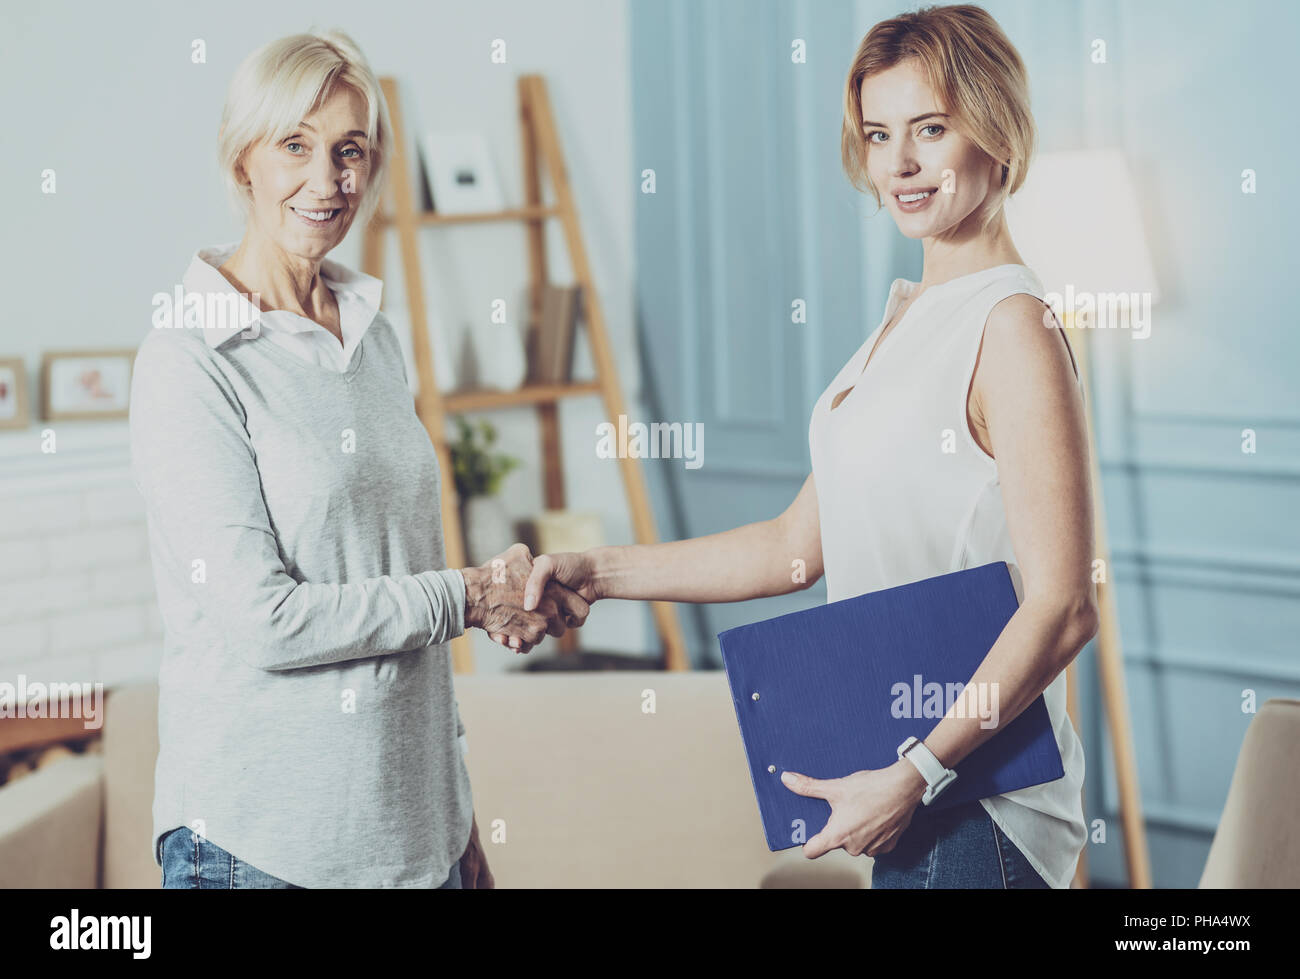 Nice joyful women shaking hands Stock Photo - Alamy